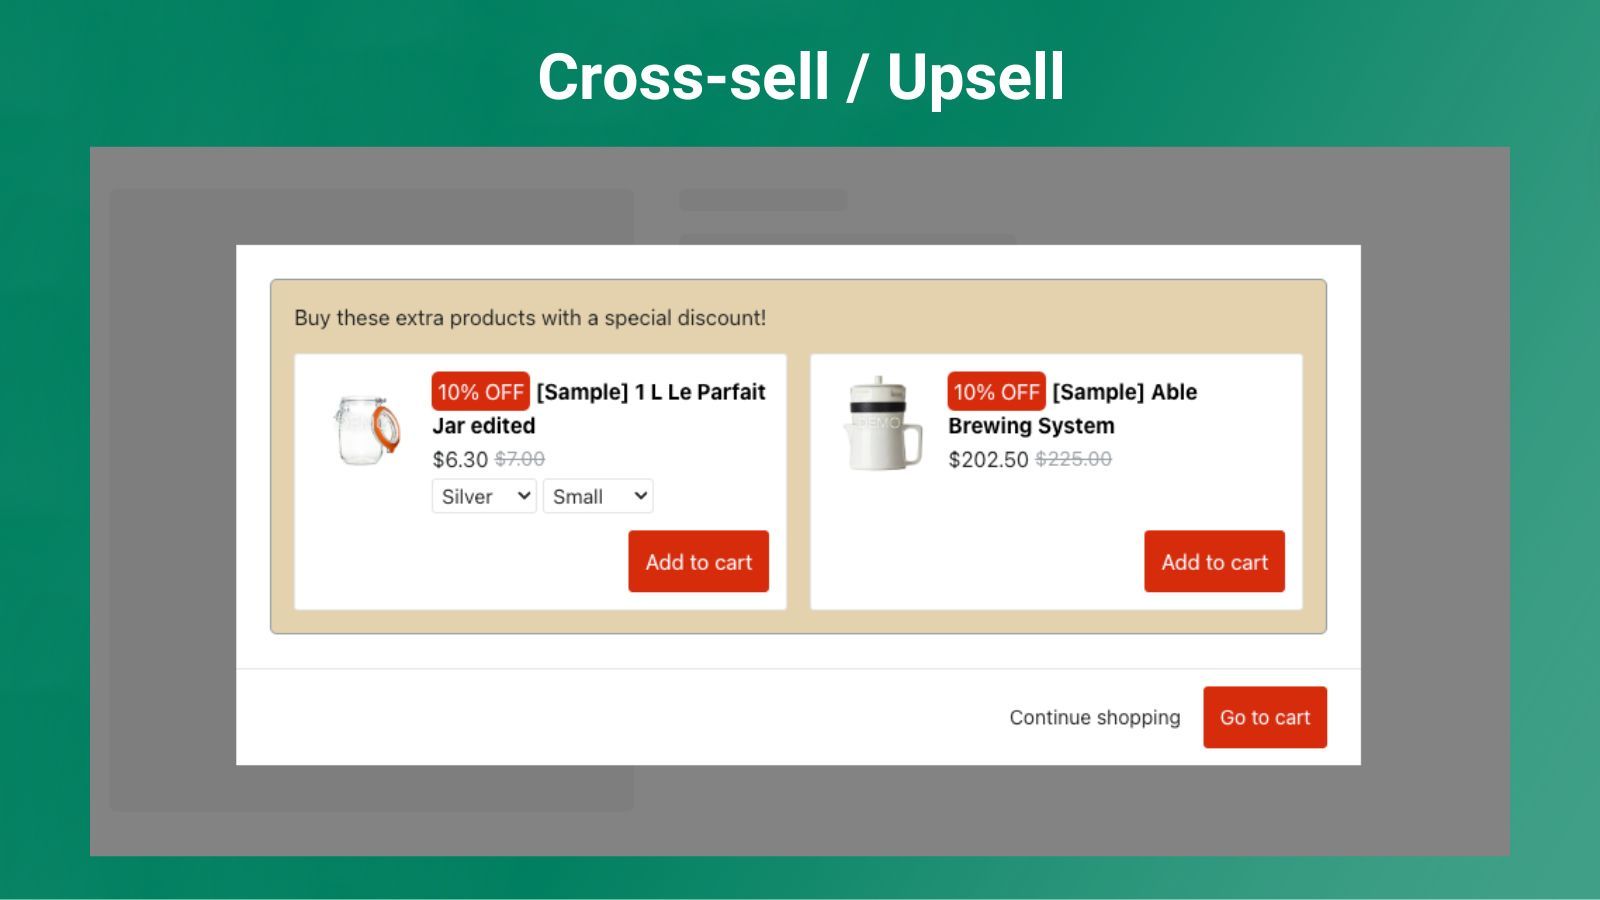 Cross-sell / Upsell